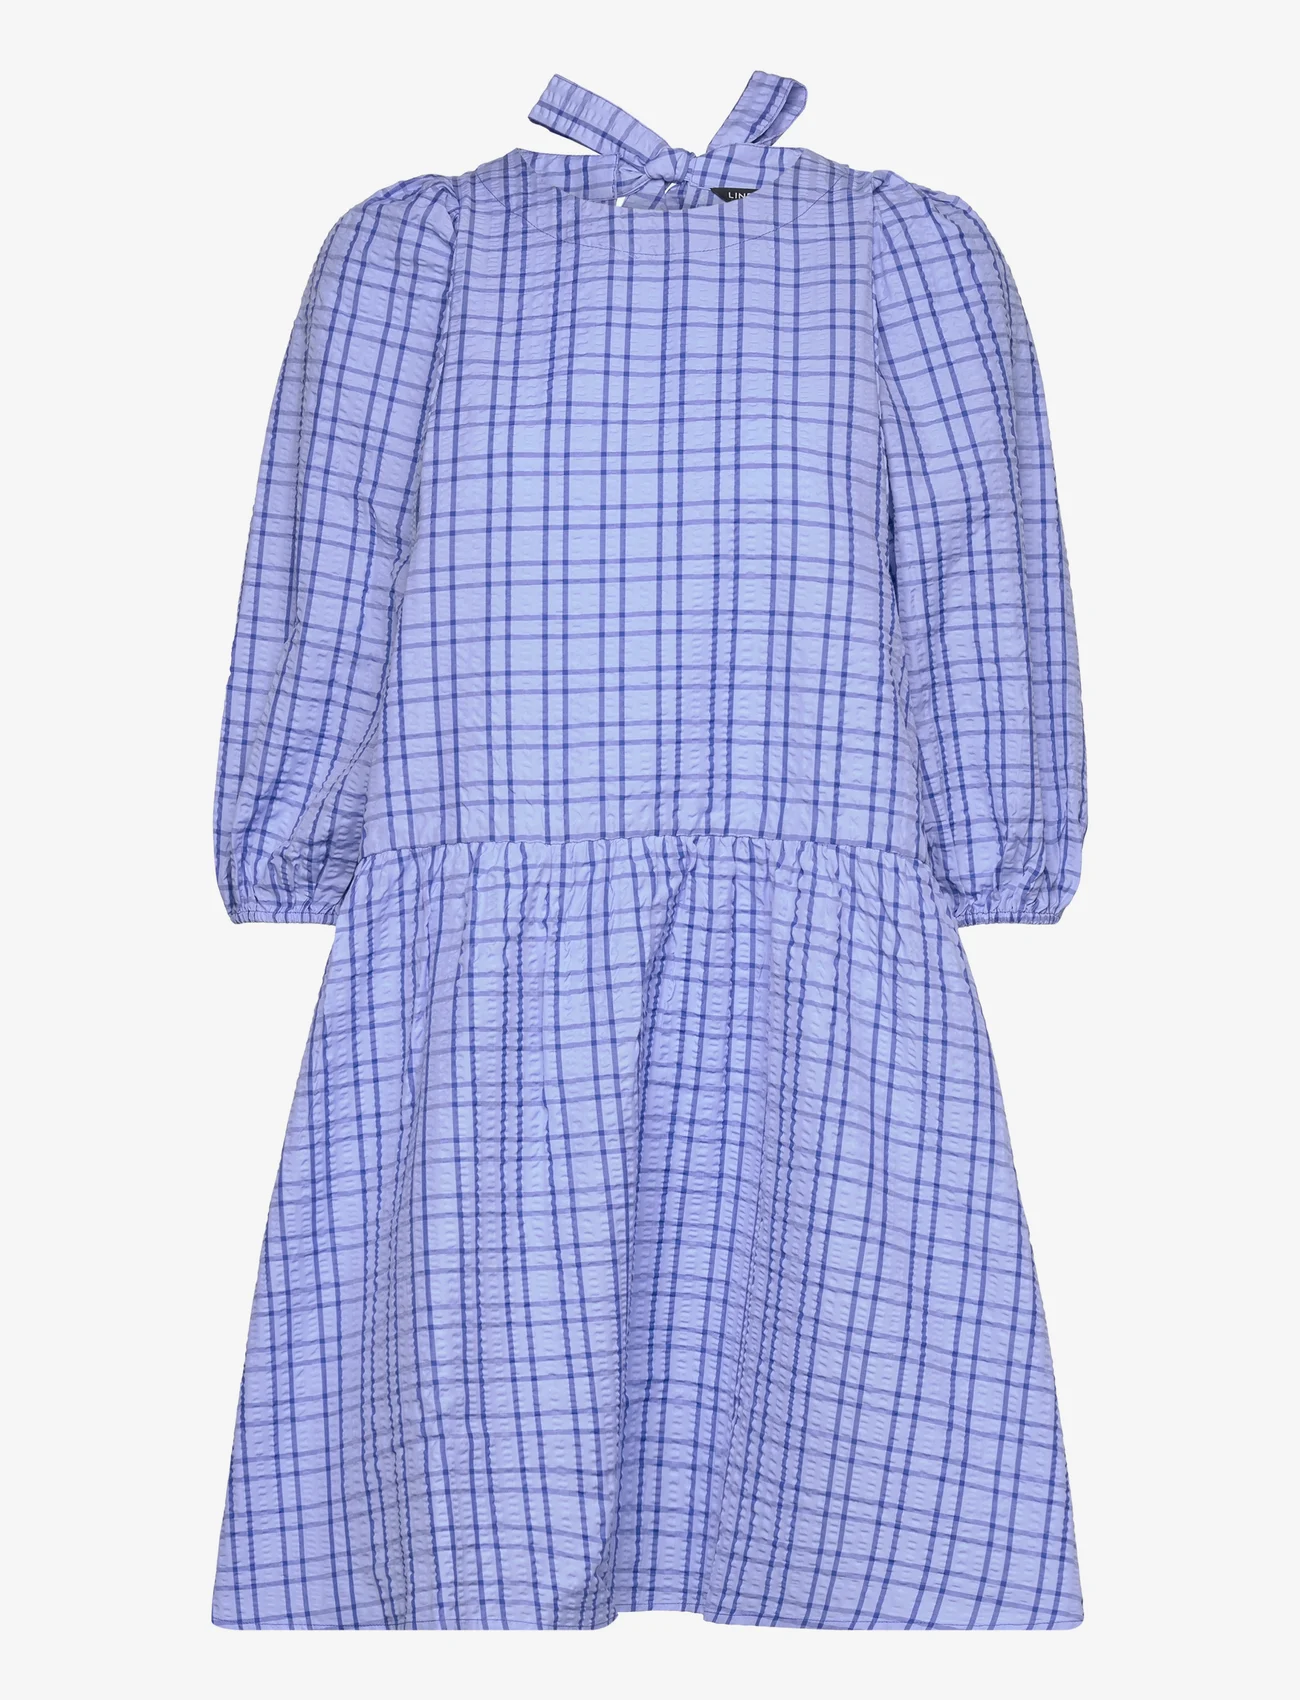 Lindex - Dress Bliss Check - vasaras kleitas - light blue - 0